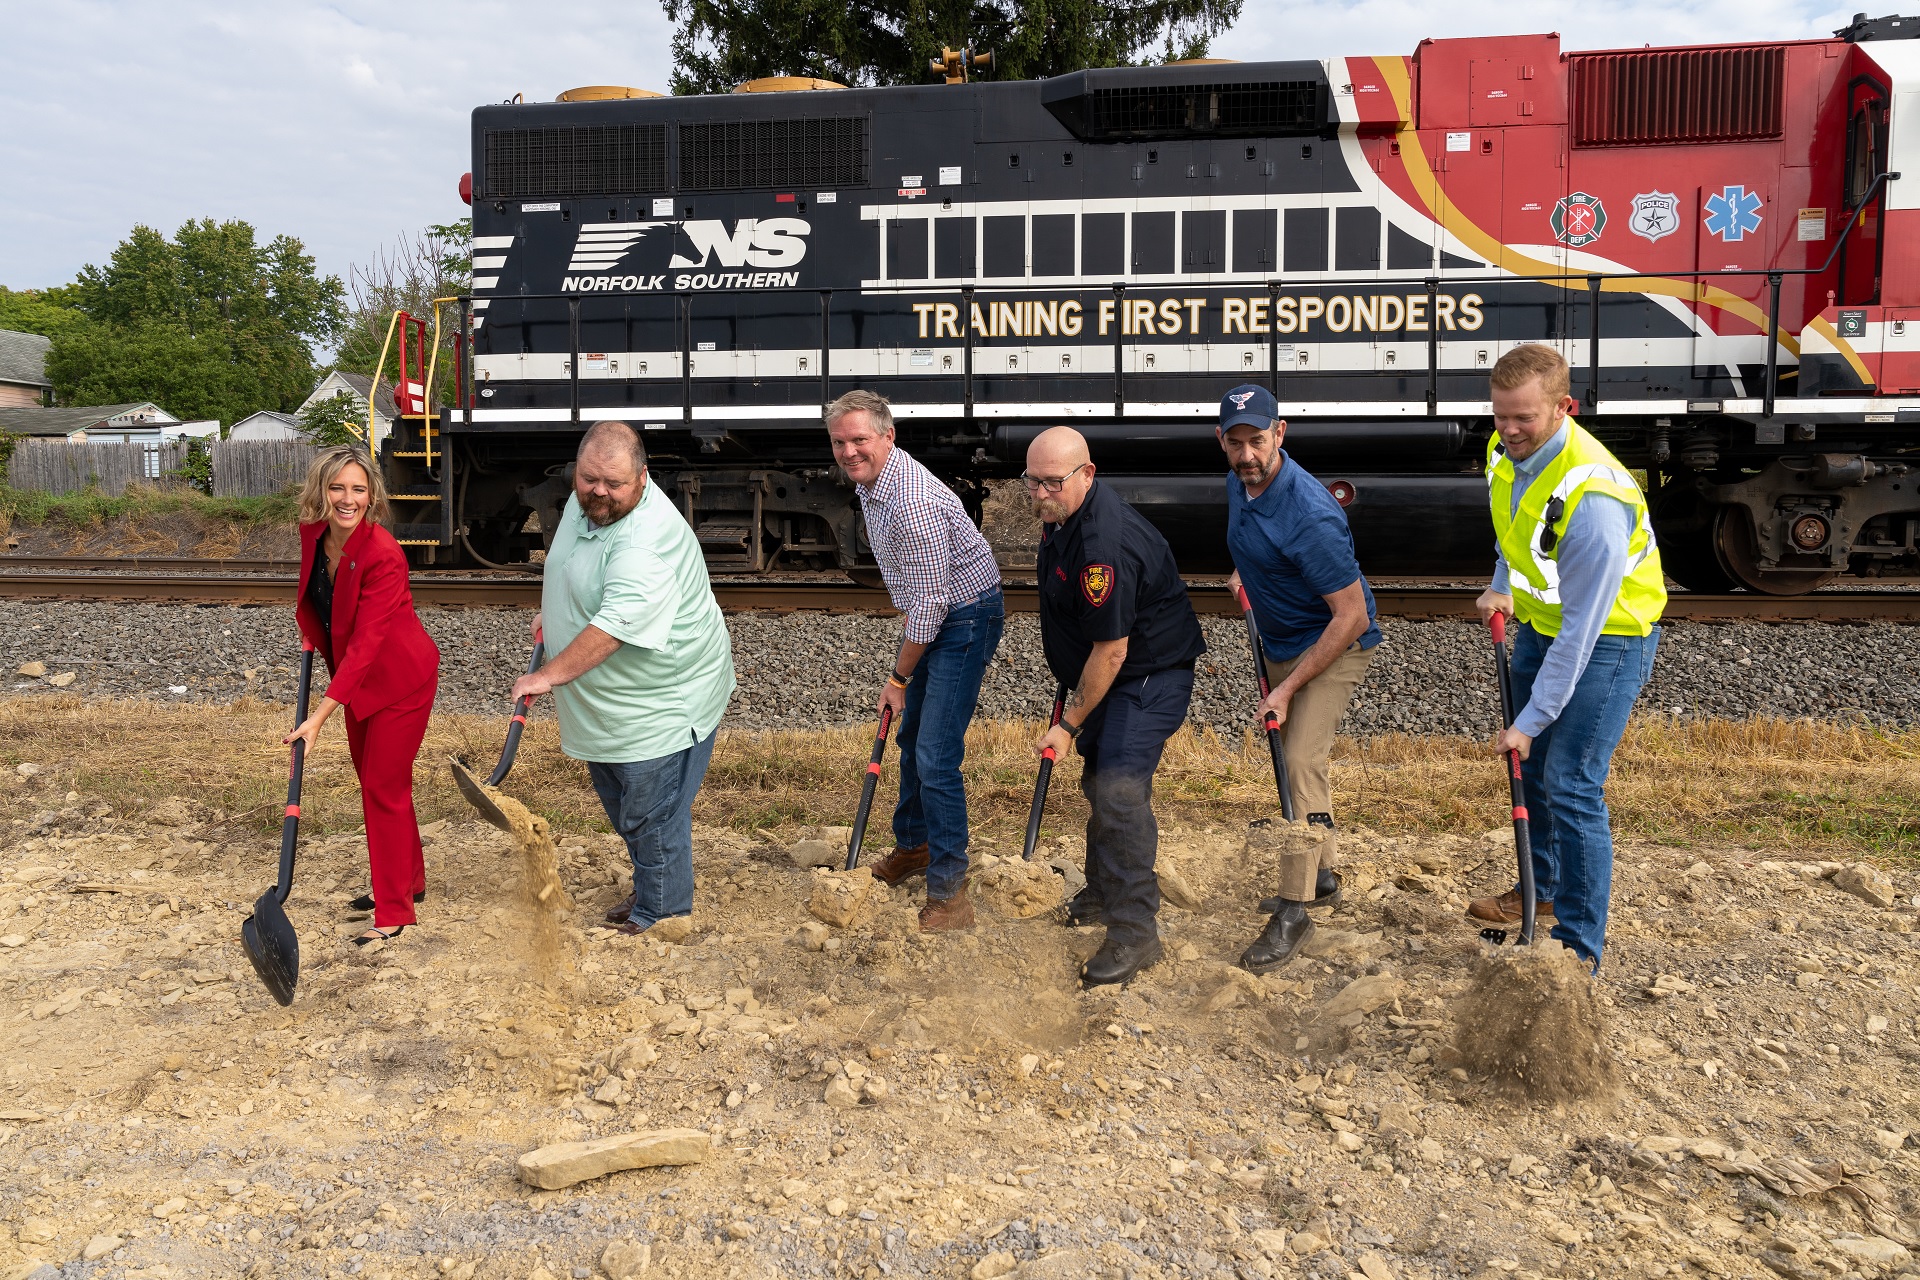 NS breaks ground on regional safety training center in Ohio
